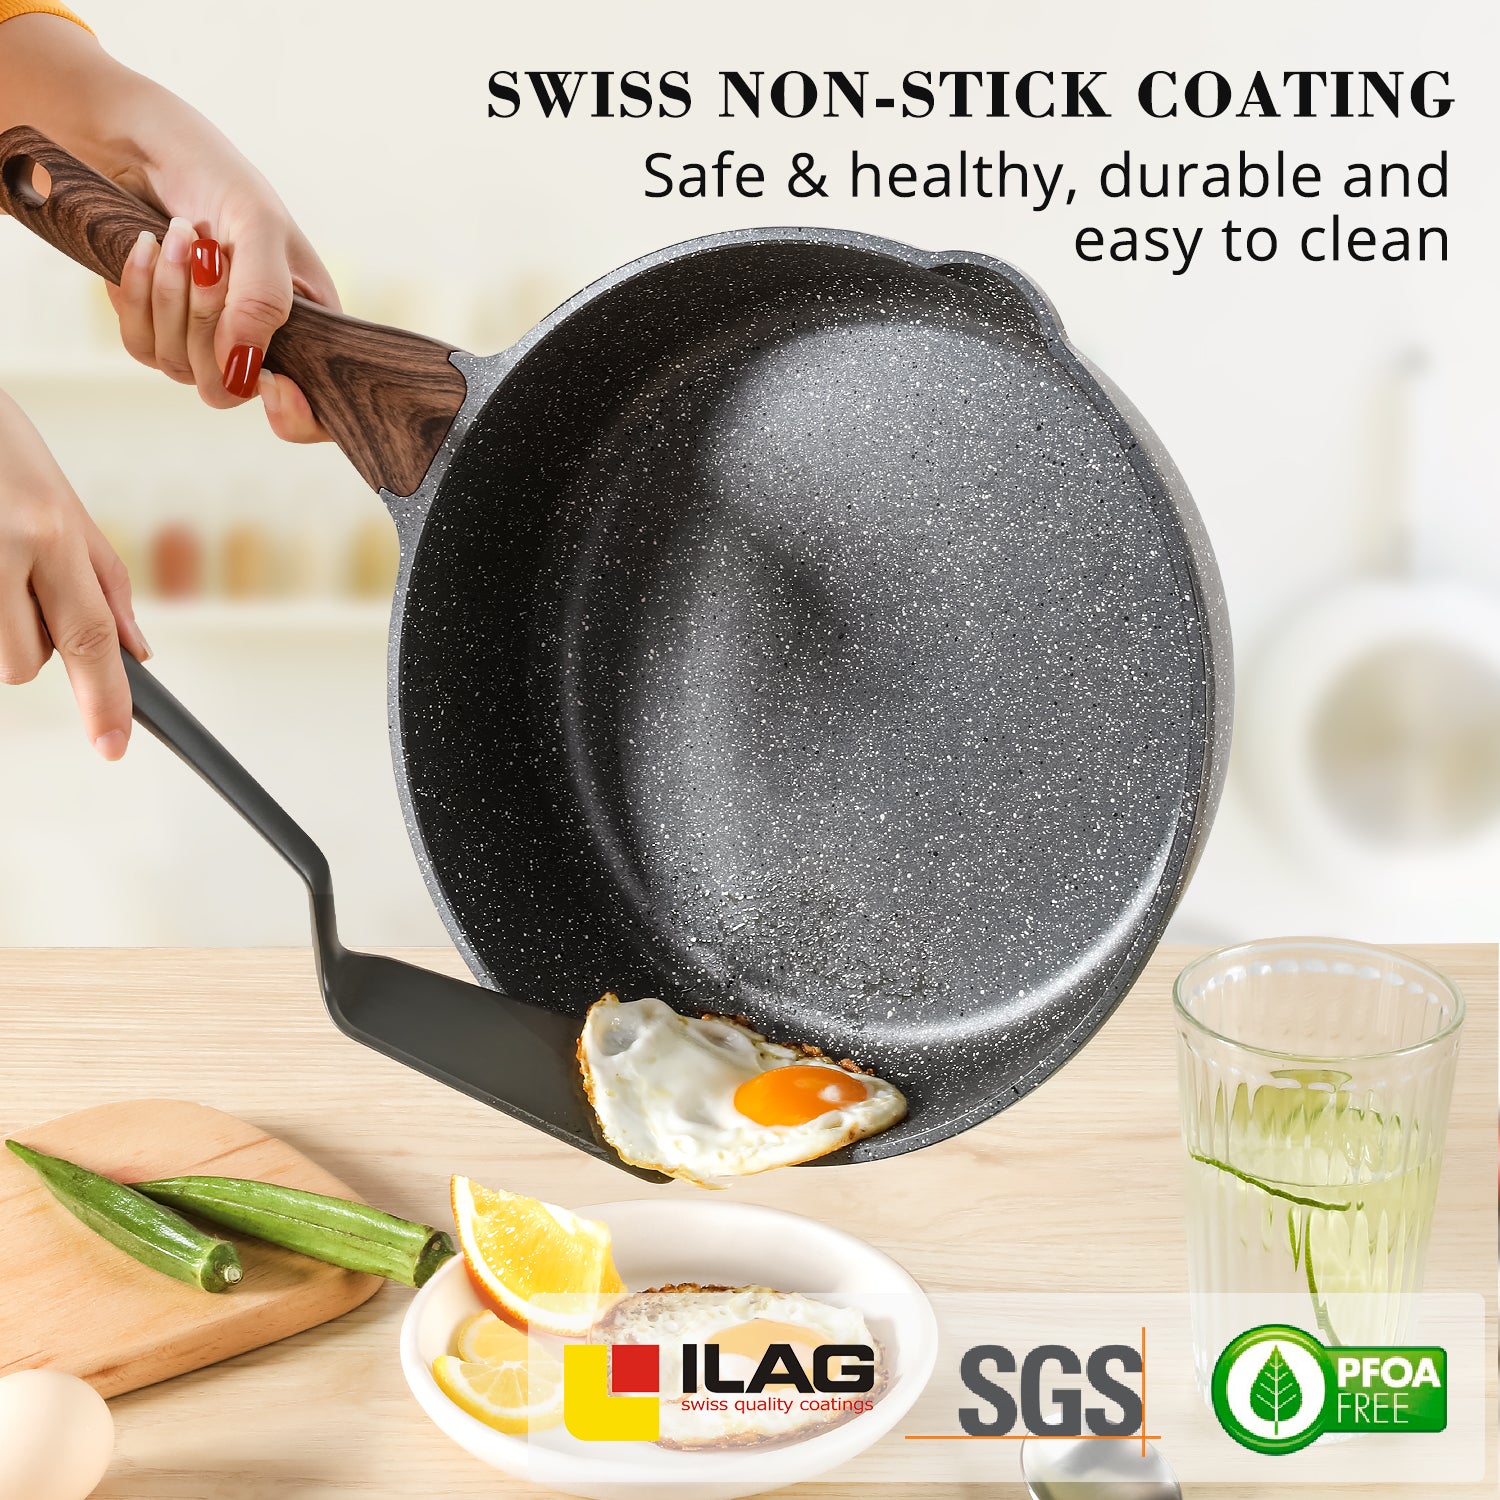 SENSARTE Nonstick Frying Pan Skillet with Lid Swiss Granite 8″ Glass Lid